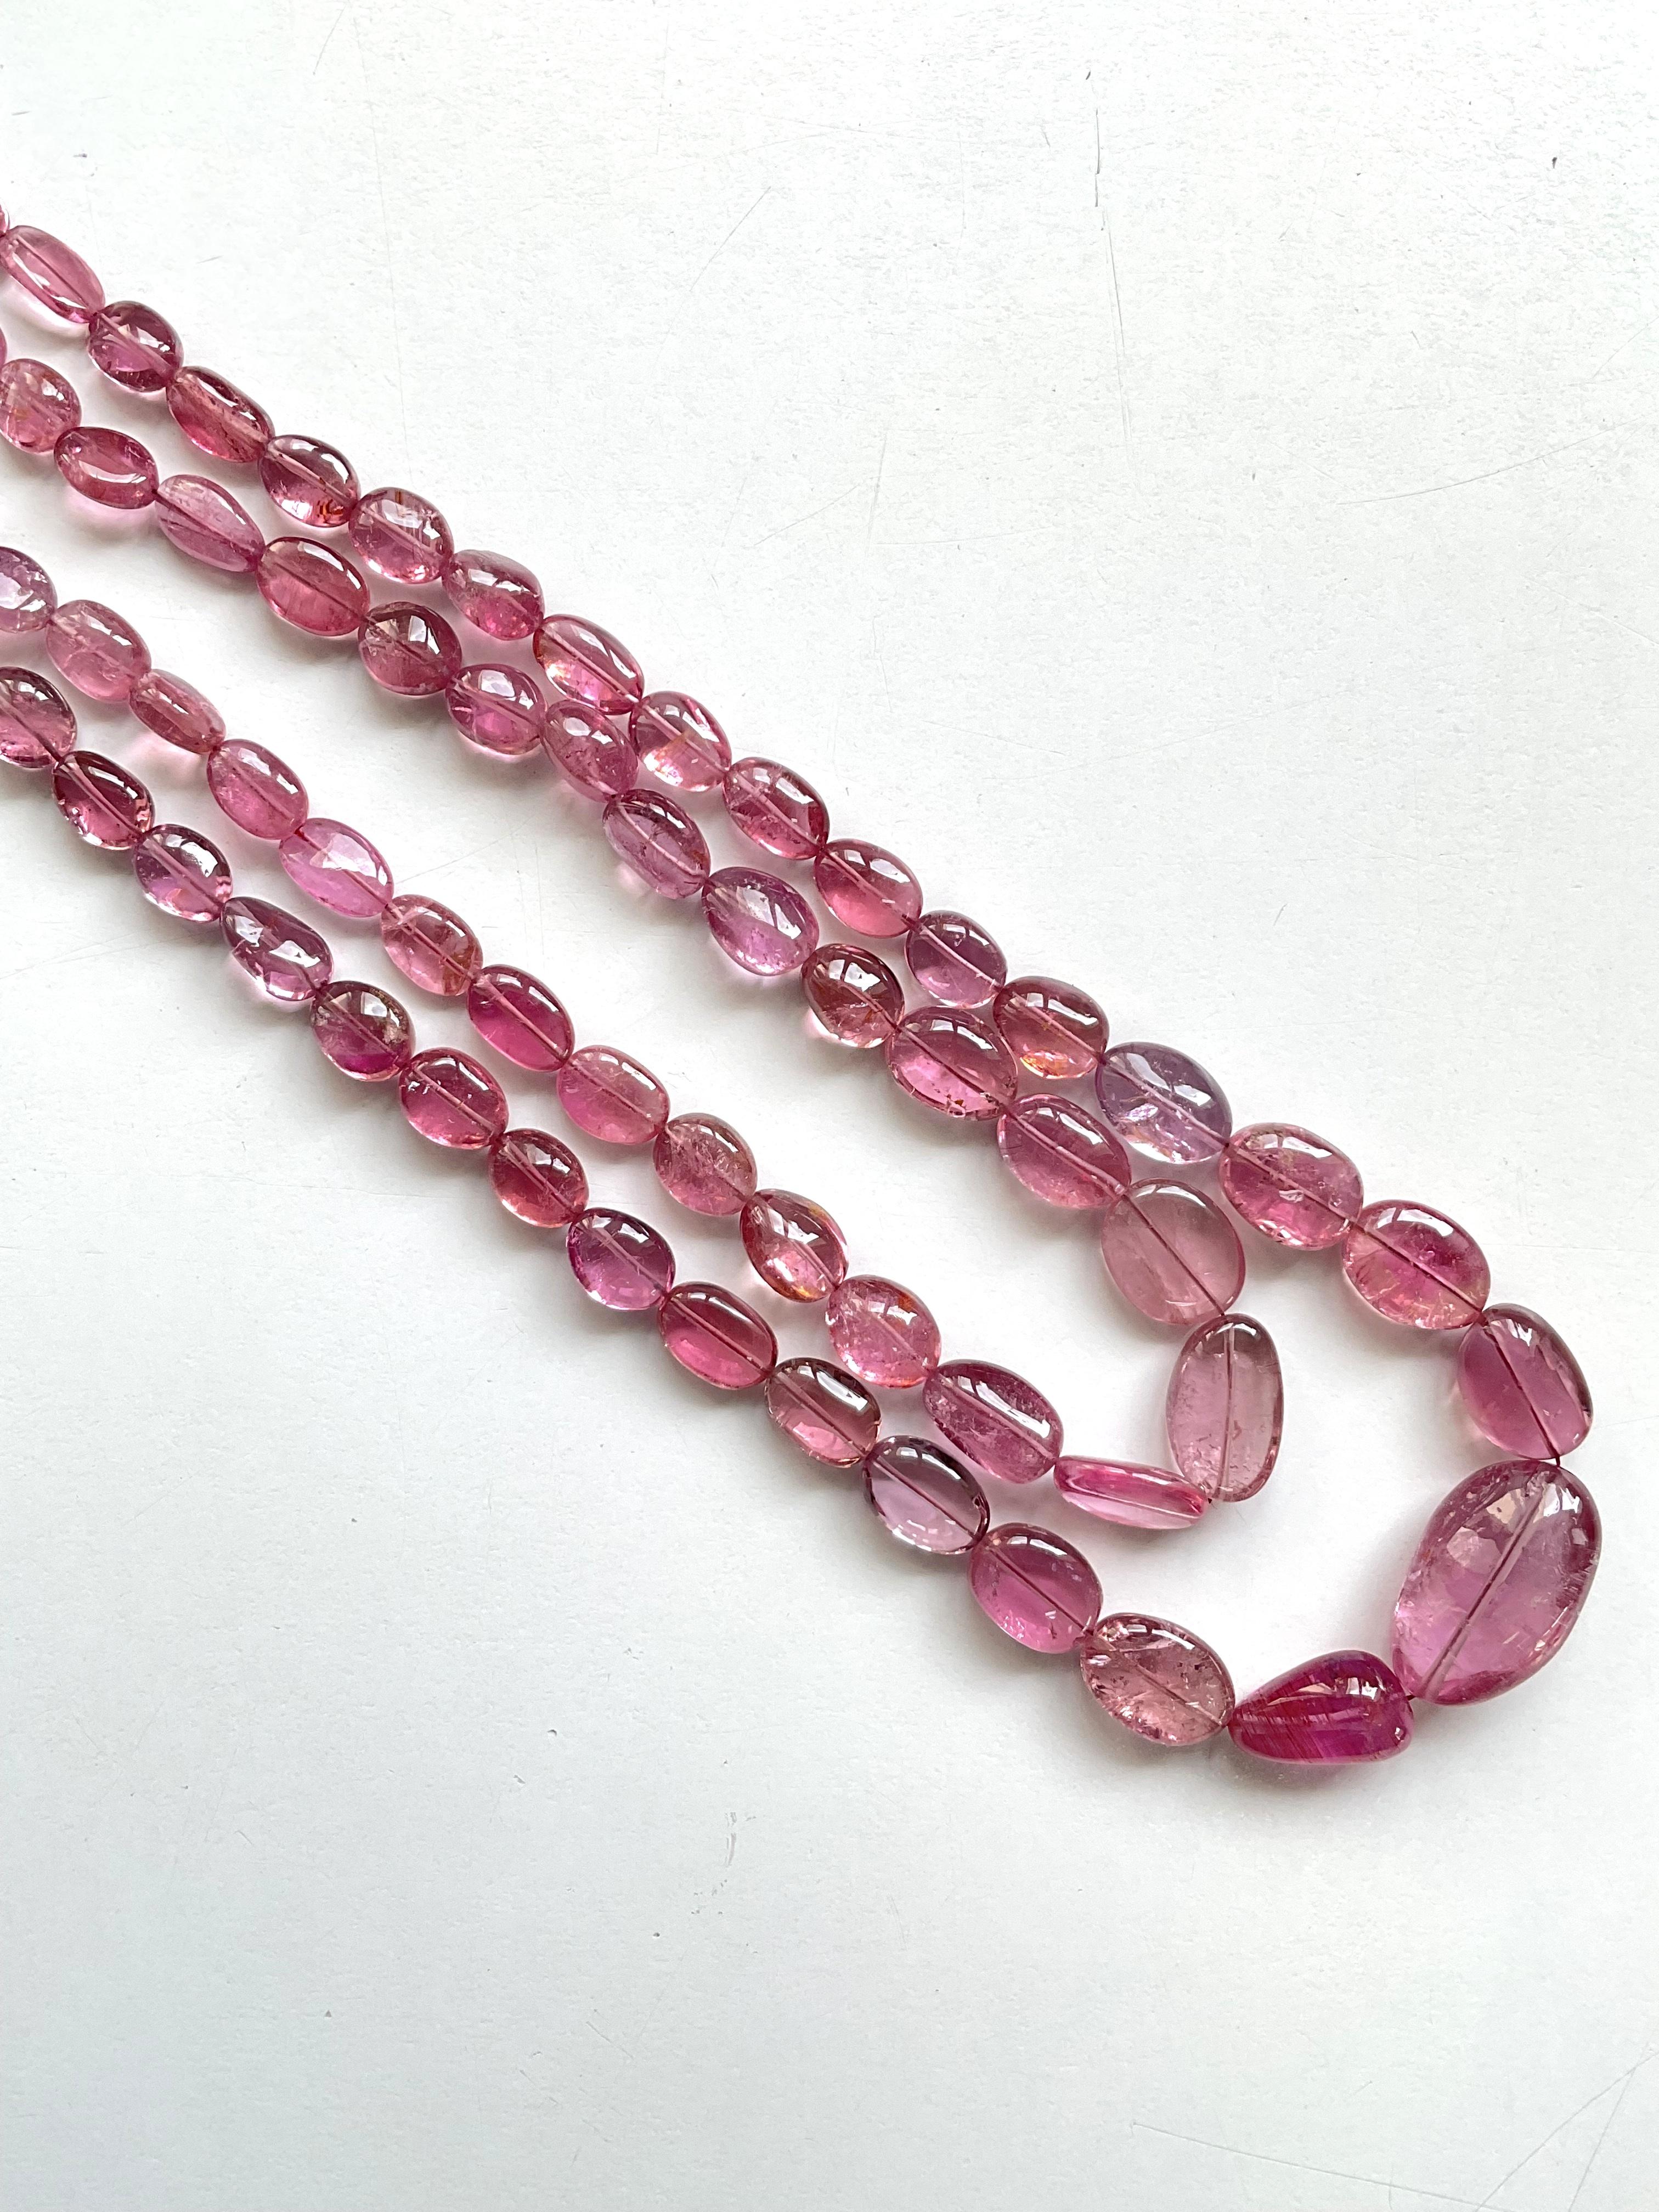 Pink Tourmaline Plain Beads For Top Fine Jewelry Natural Gem
Gemstone - Tourmaline
Weight -  296.70 Carats
Strand - 2
Size - 4x6 To 14x22 MM
Shape - Tumble

